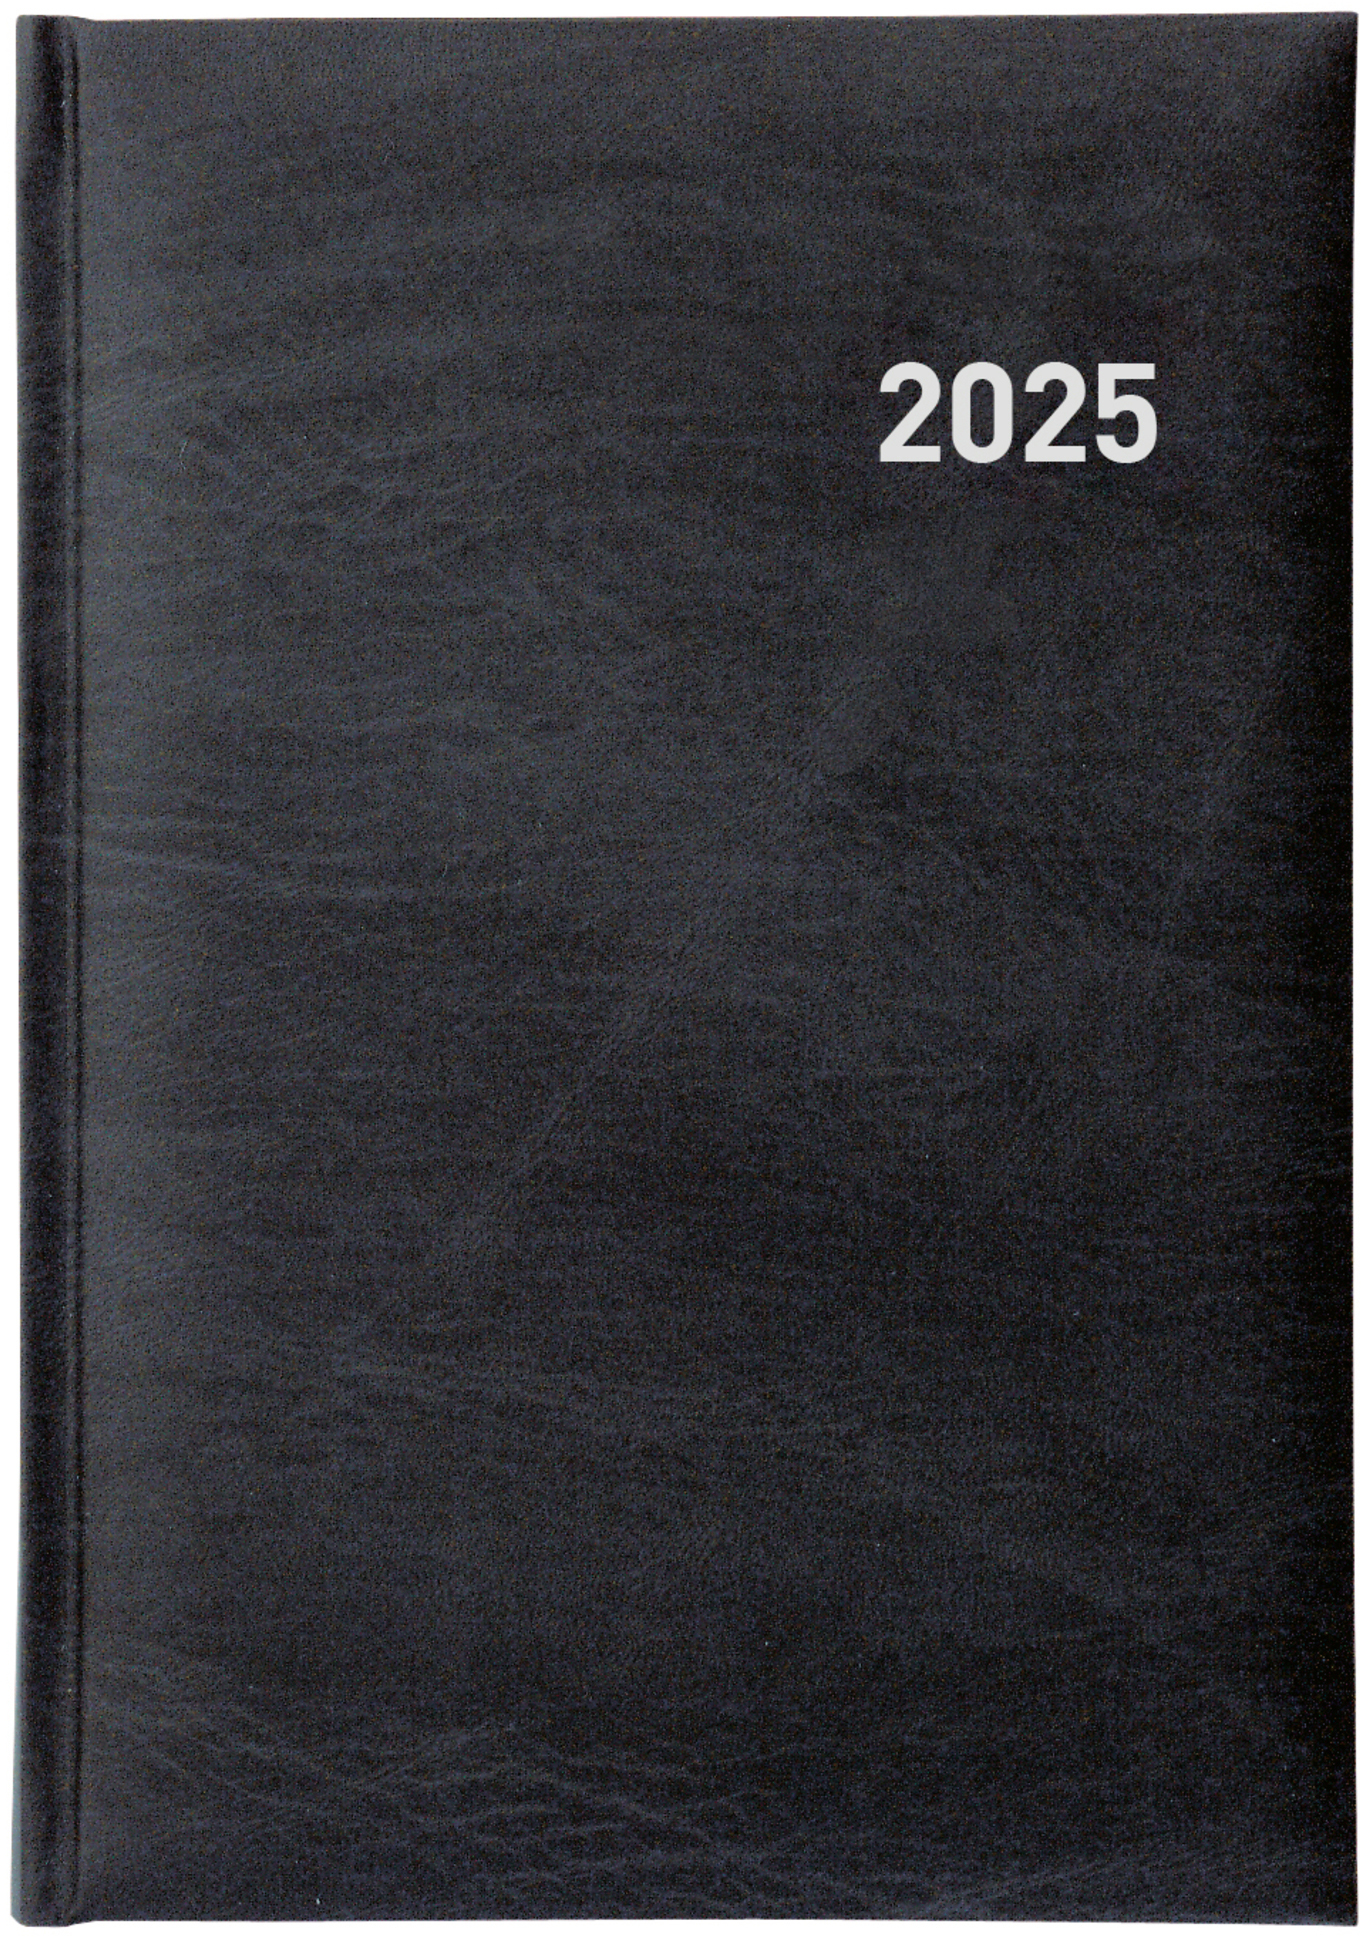 BIELLA Agenda Terminia 2025 806536020025 1S/2P noir ML 14.5x20.5cm